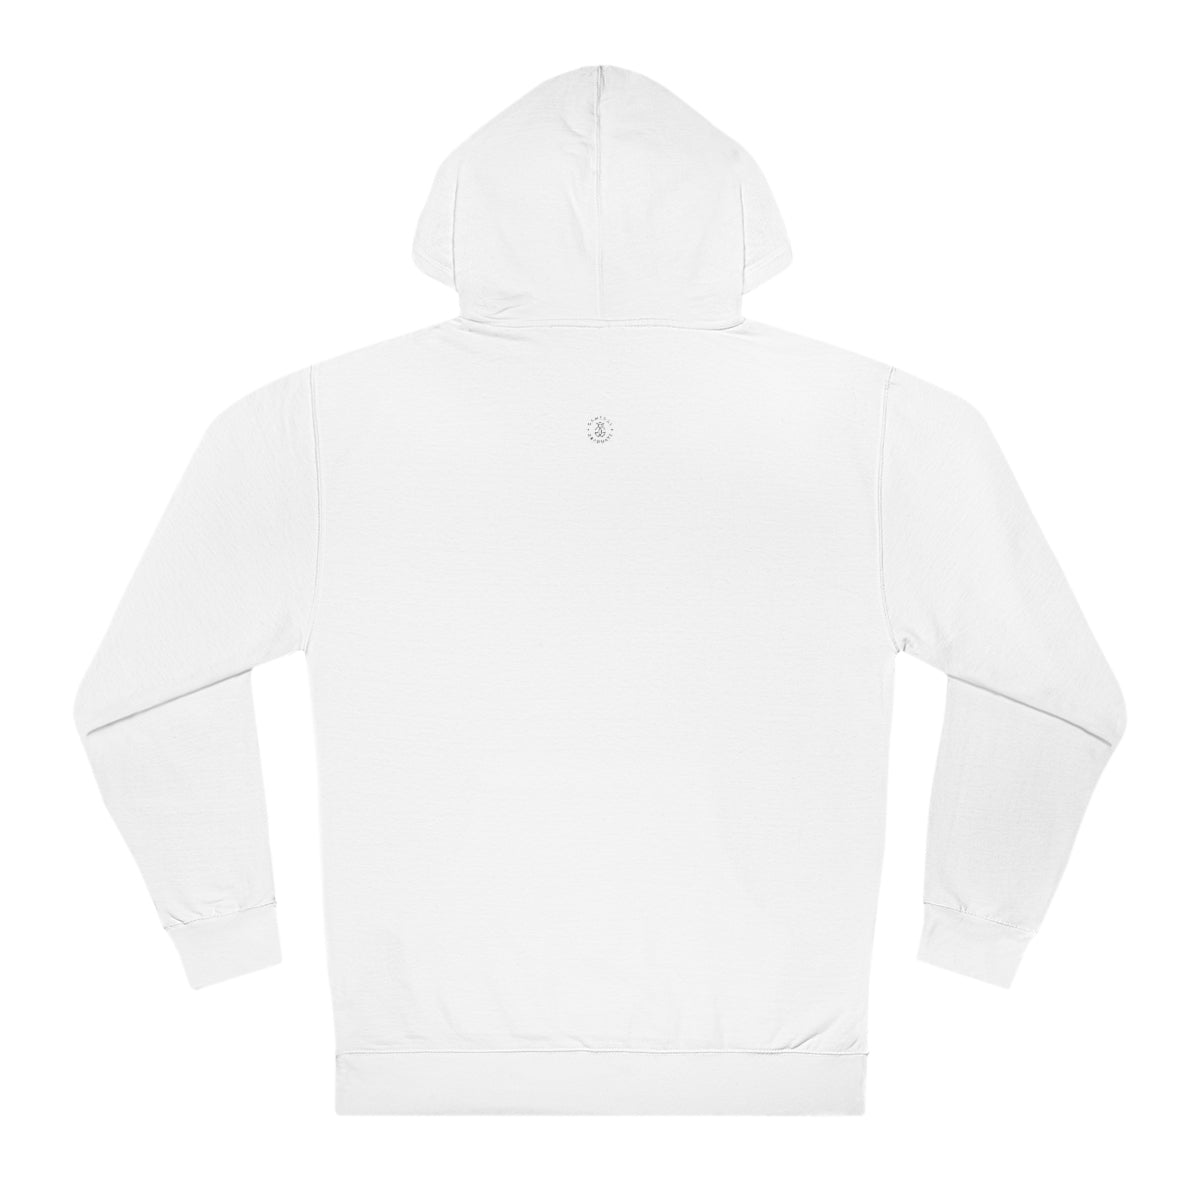 Wash State Hooded Sweatshirt - GG - ITC